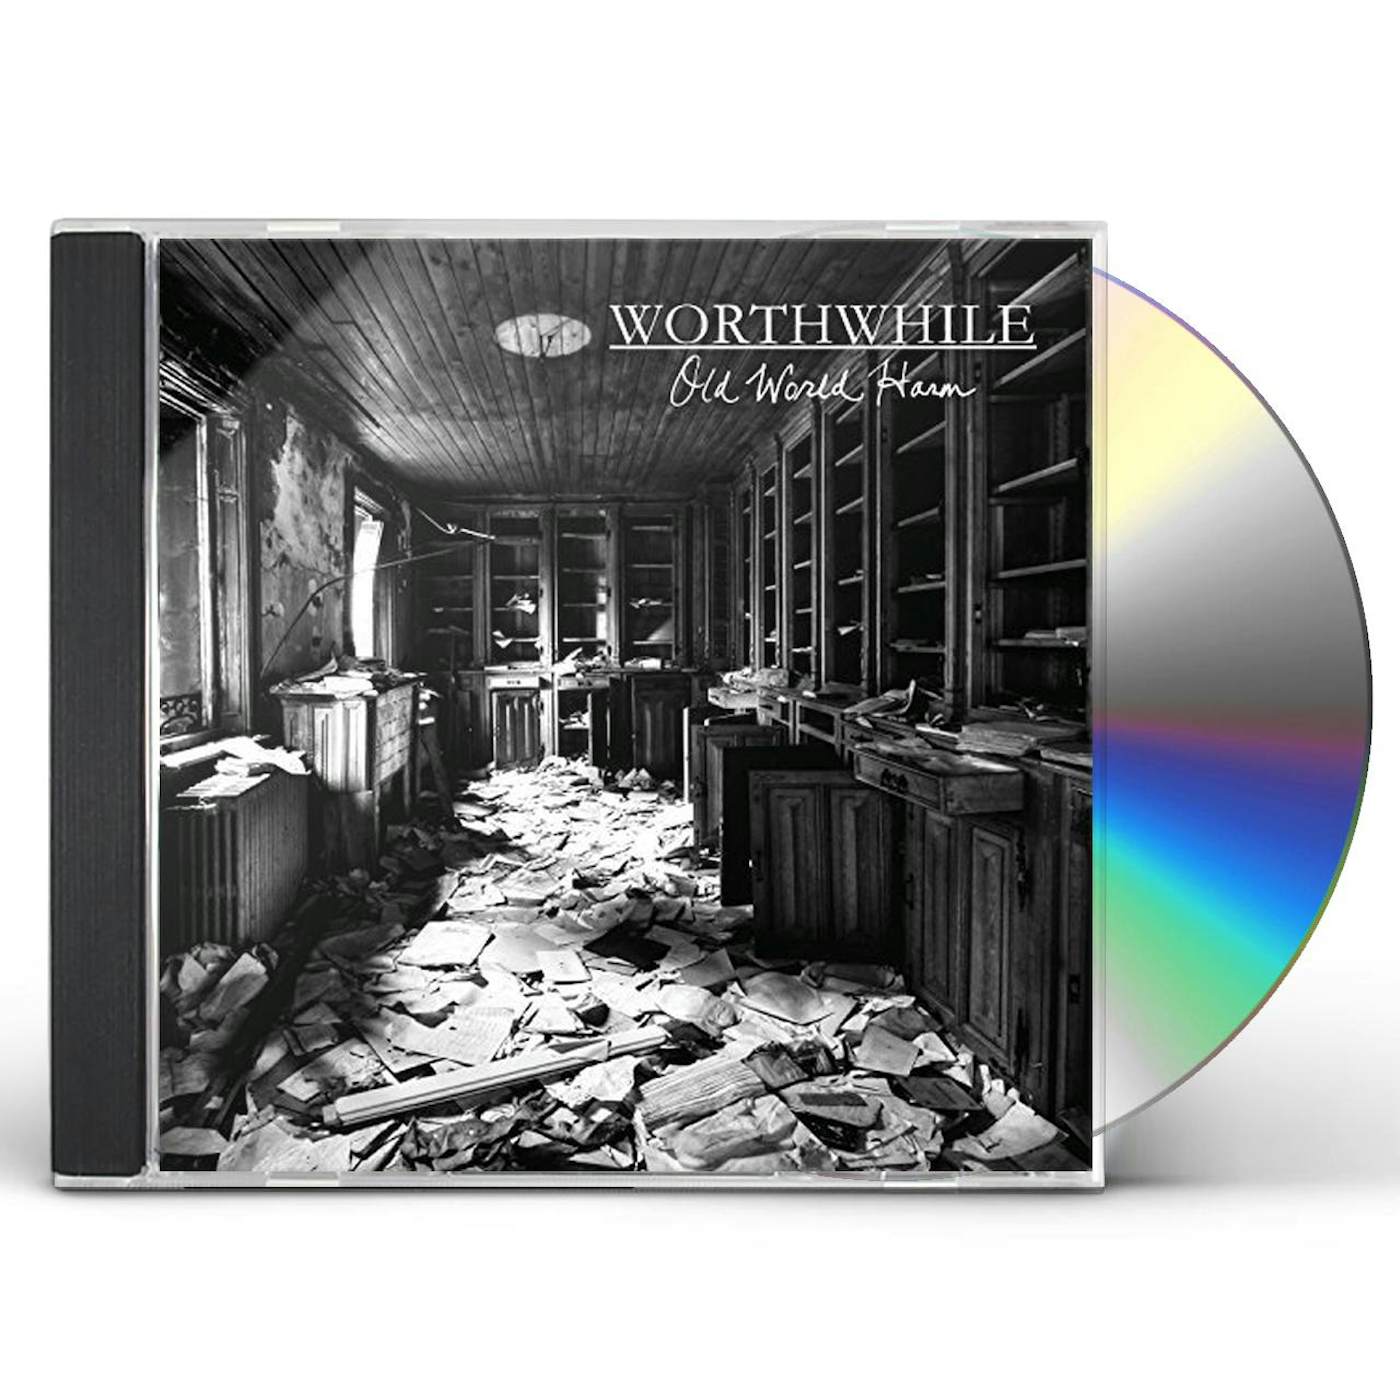 Worthwhile OLD WORLD HARM CD